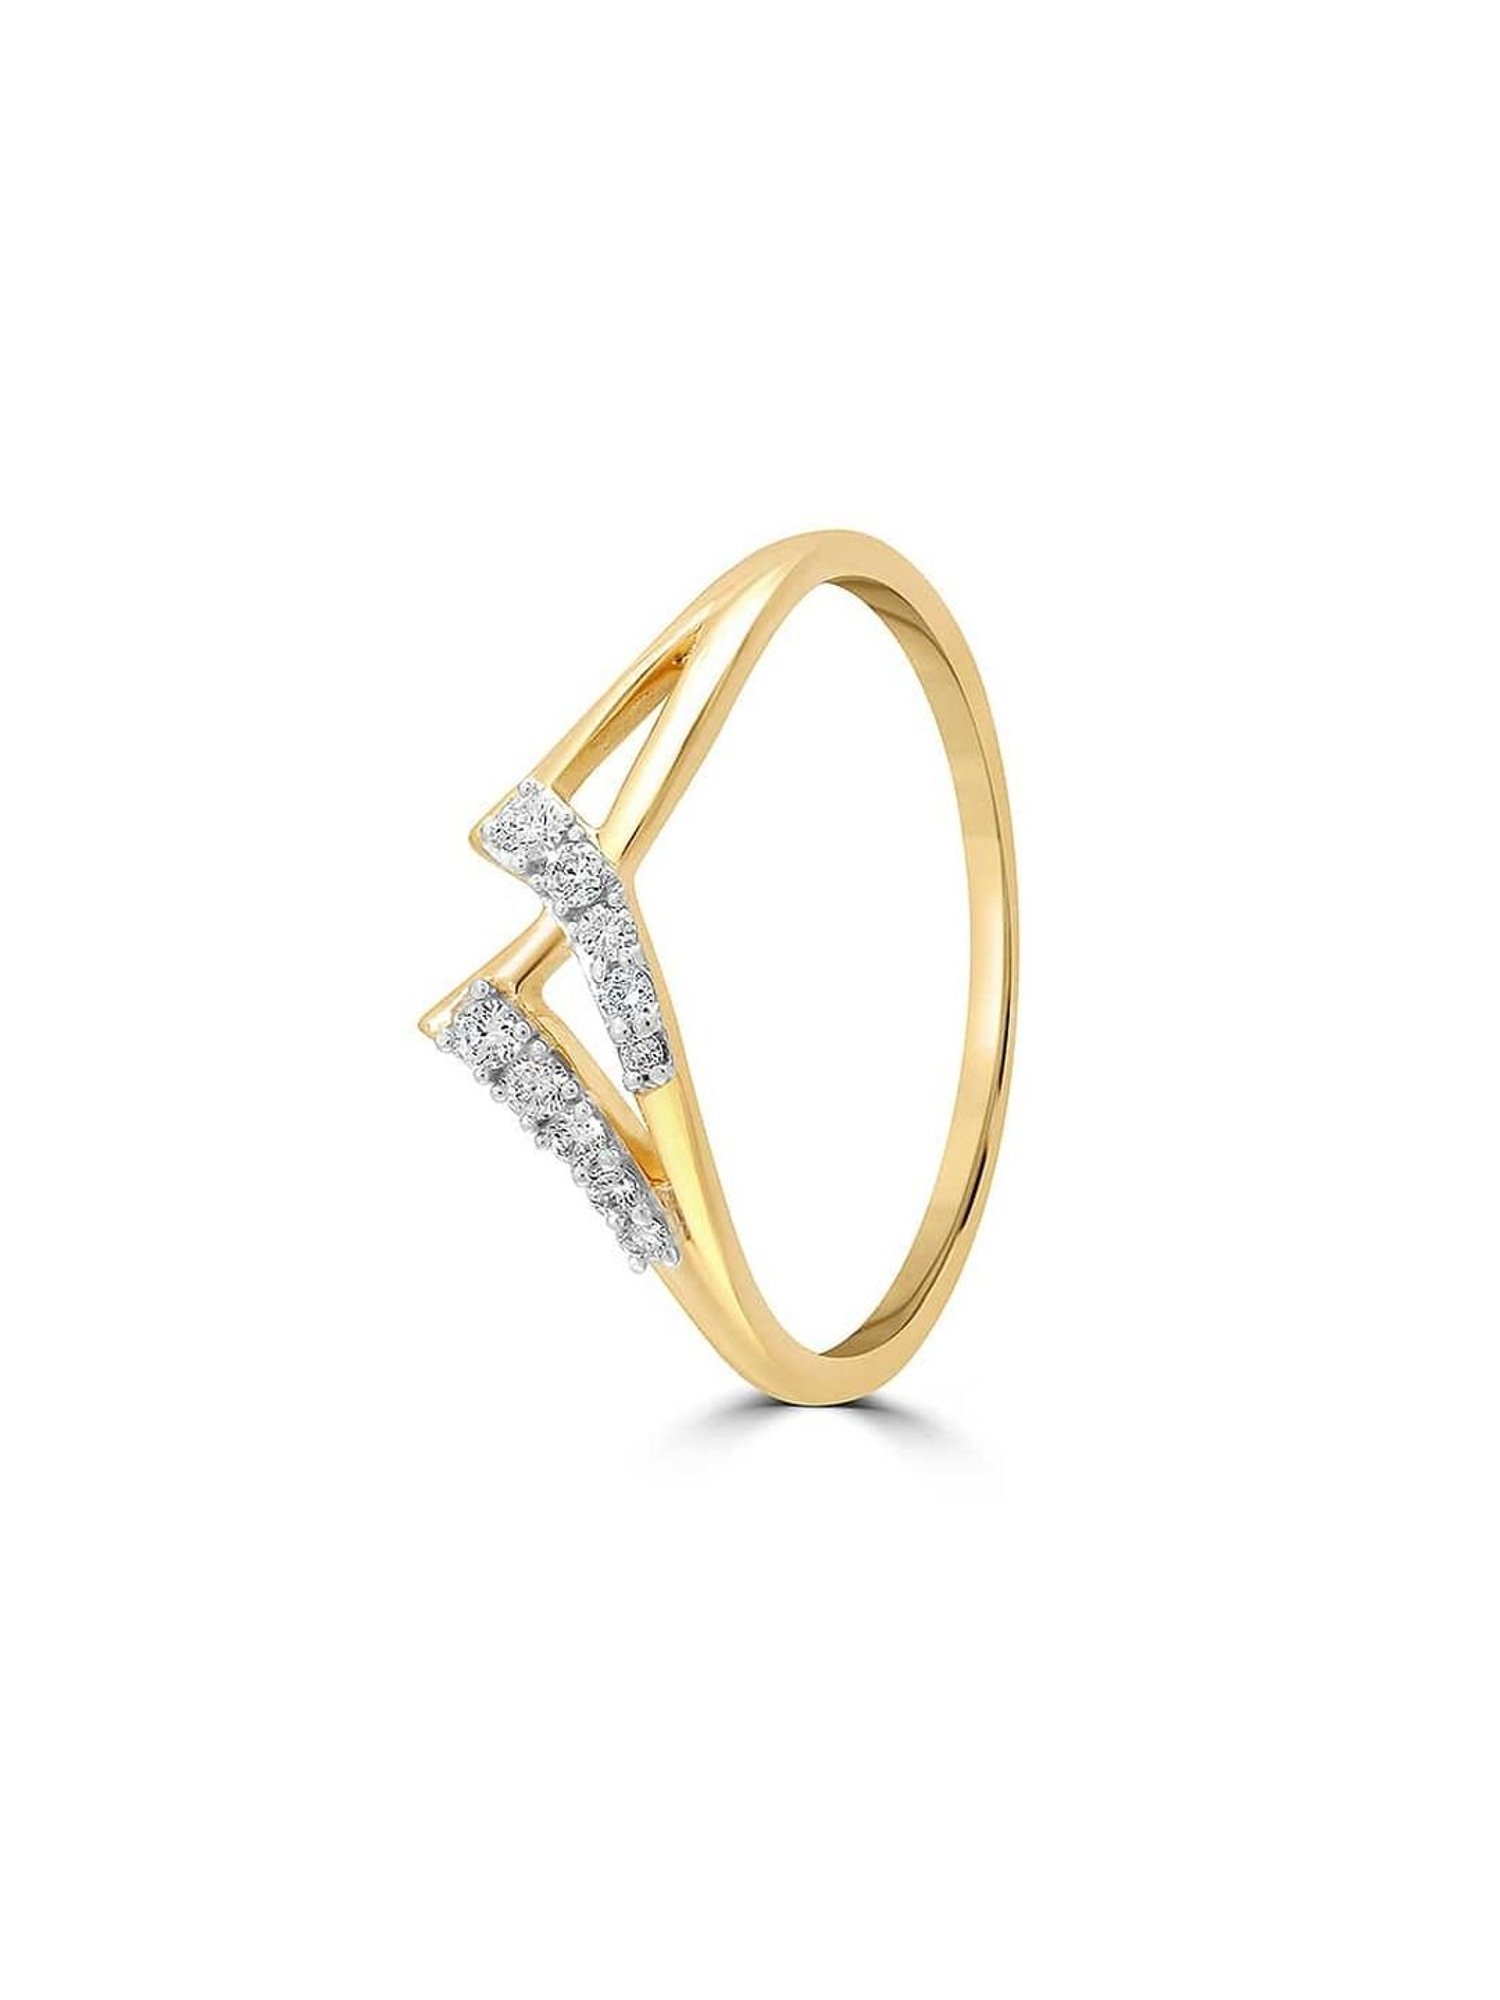 86Gm Onwards Tanishq Gold & Diamond Ring Designs & Price Mia Collection | Tanishq  Gold Ring Designs - YouTube